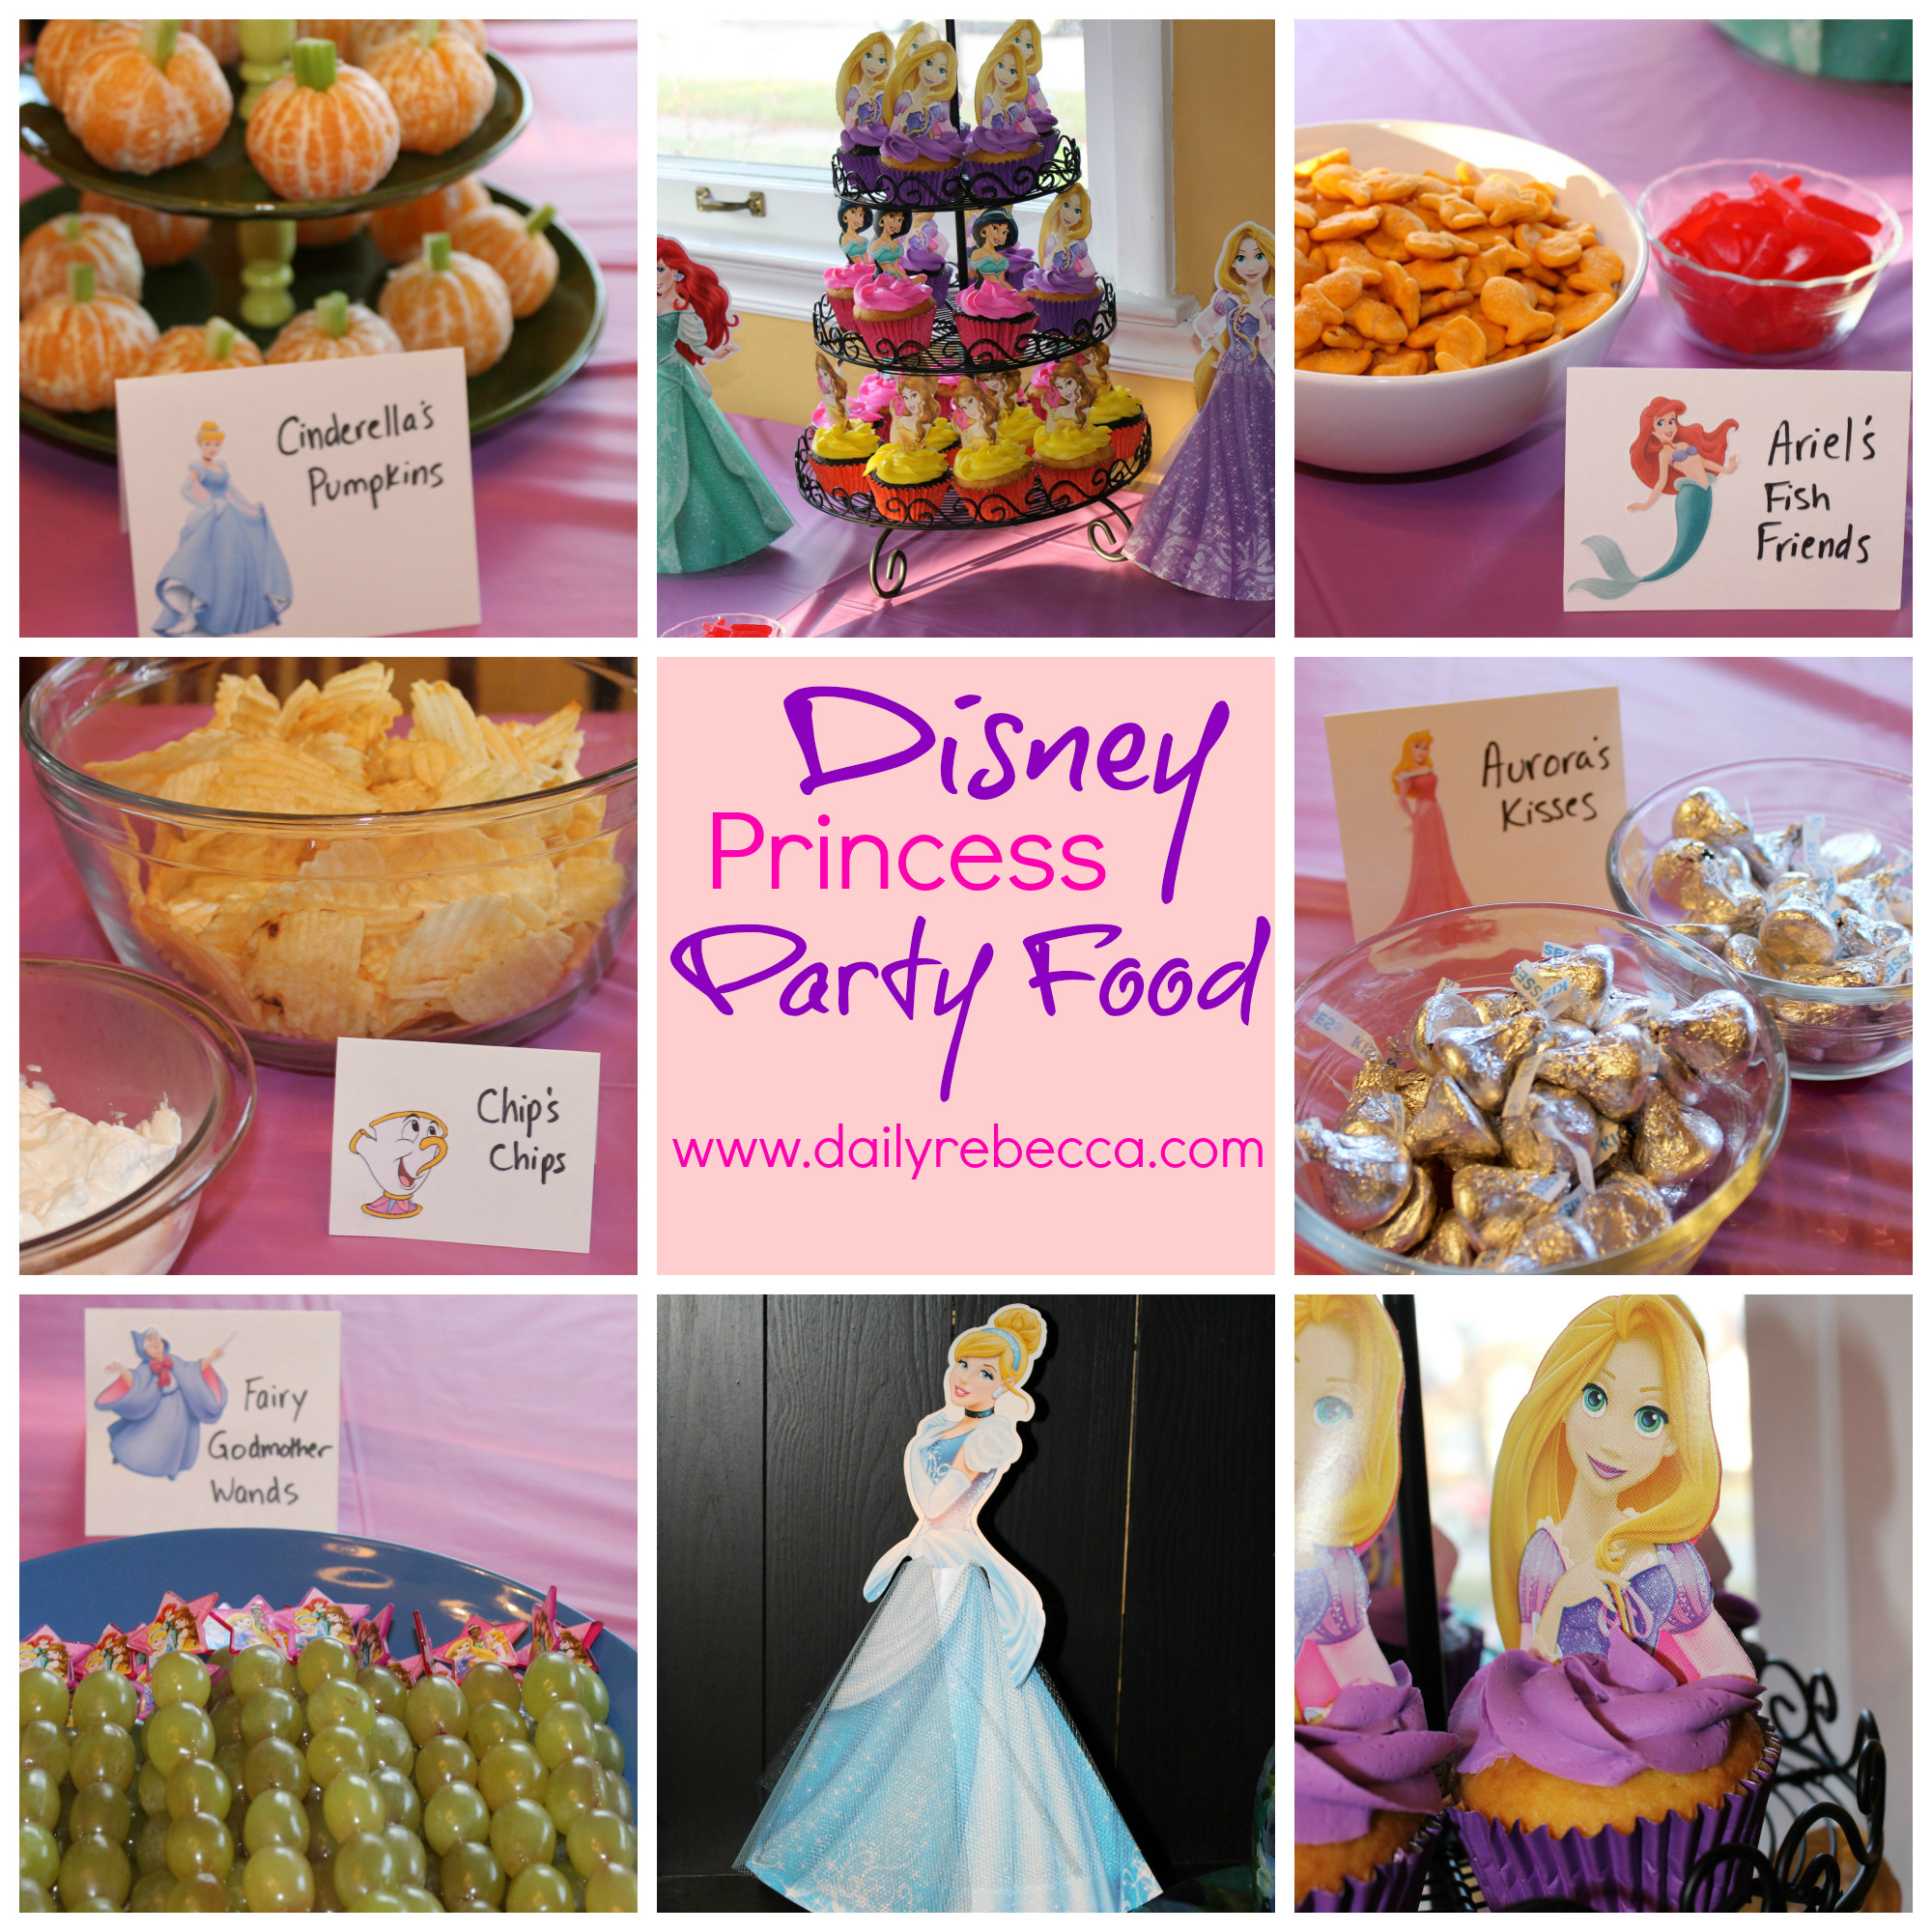 Disney Princess Party Food Ideas
 Avery Turns Two A Disney Princess Party Daily Rebecca